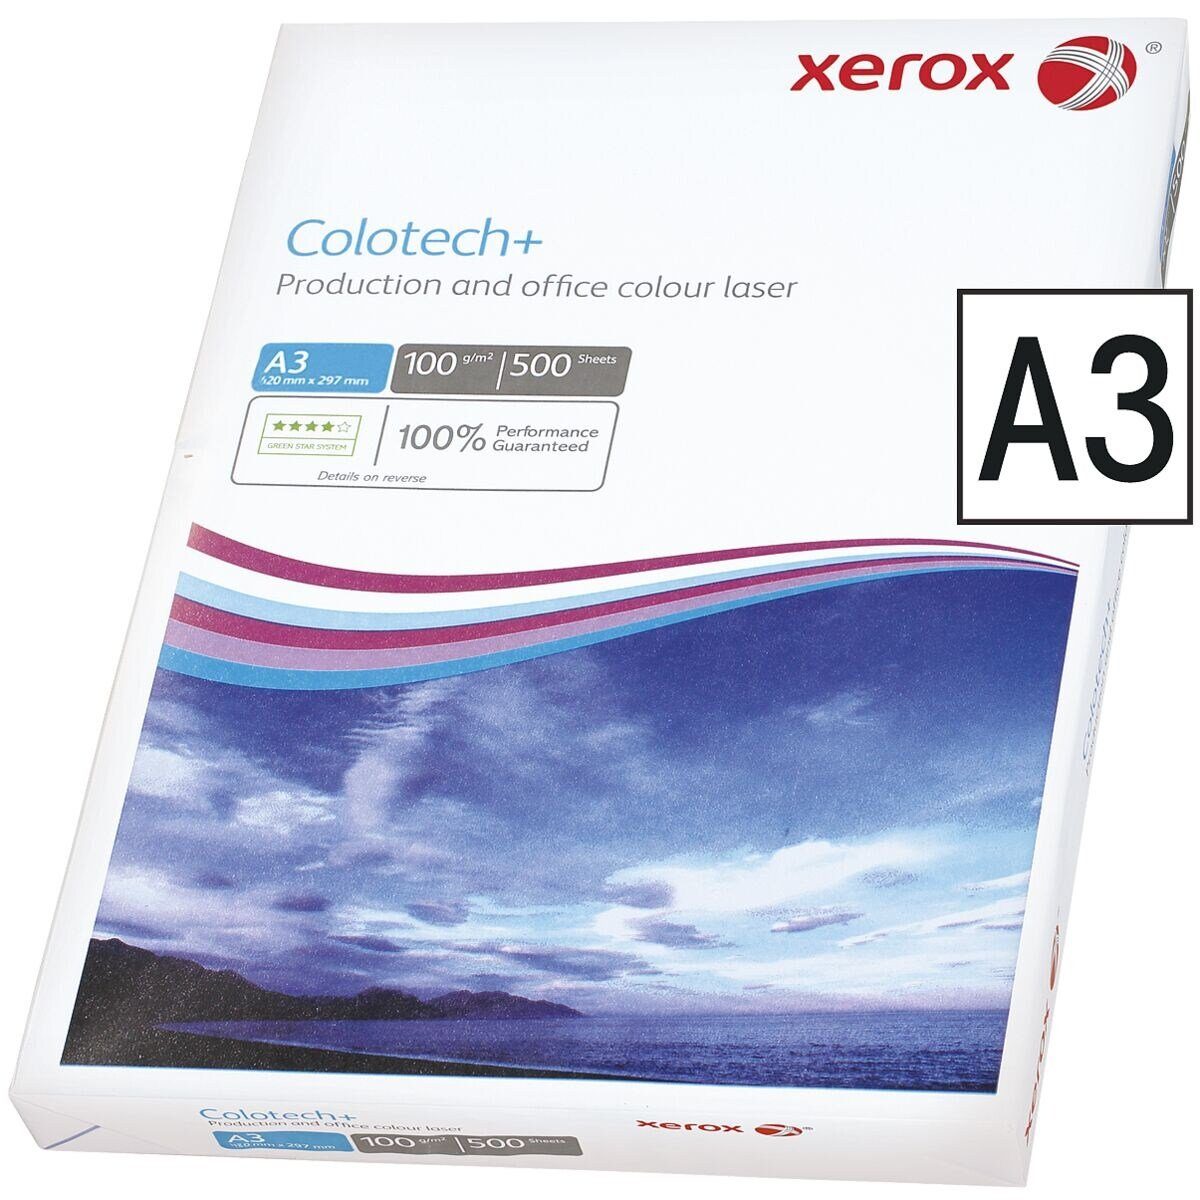 Xerox Farblaser-Druckerpapier Colotech+, Format DIN A3, 100 g/m², 500 Blatt | Farblaserpapier